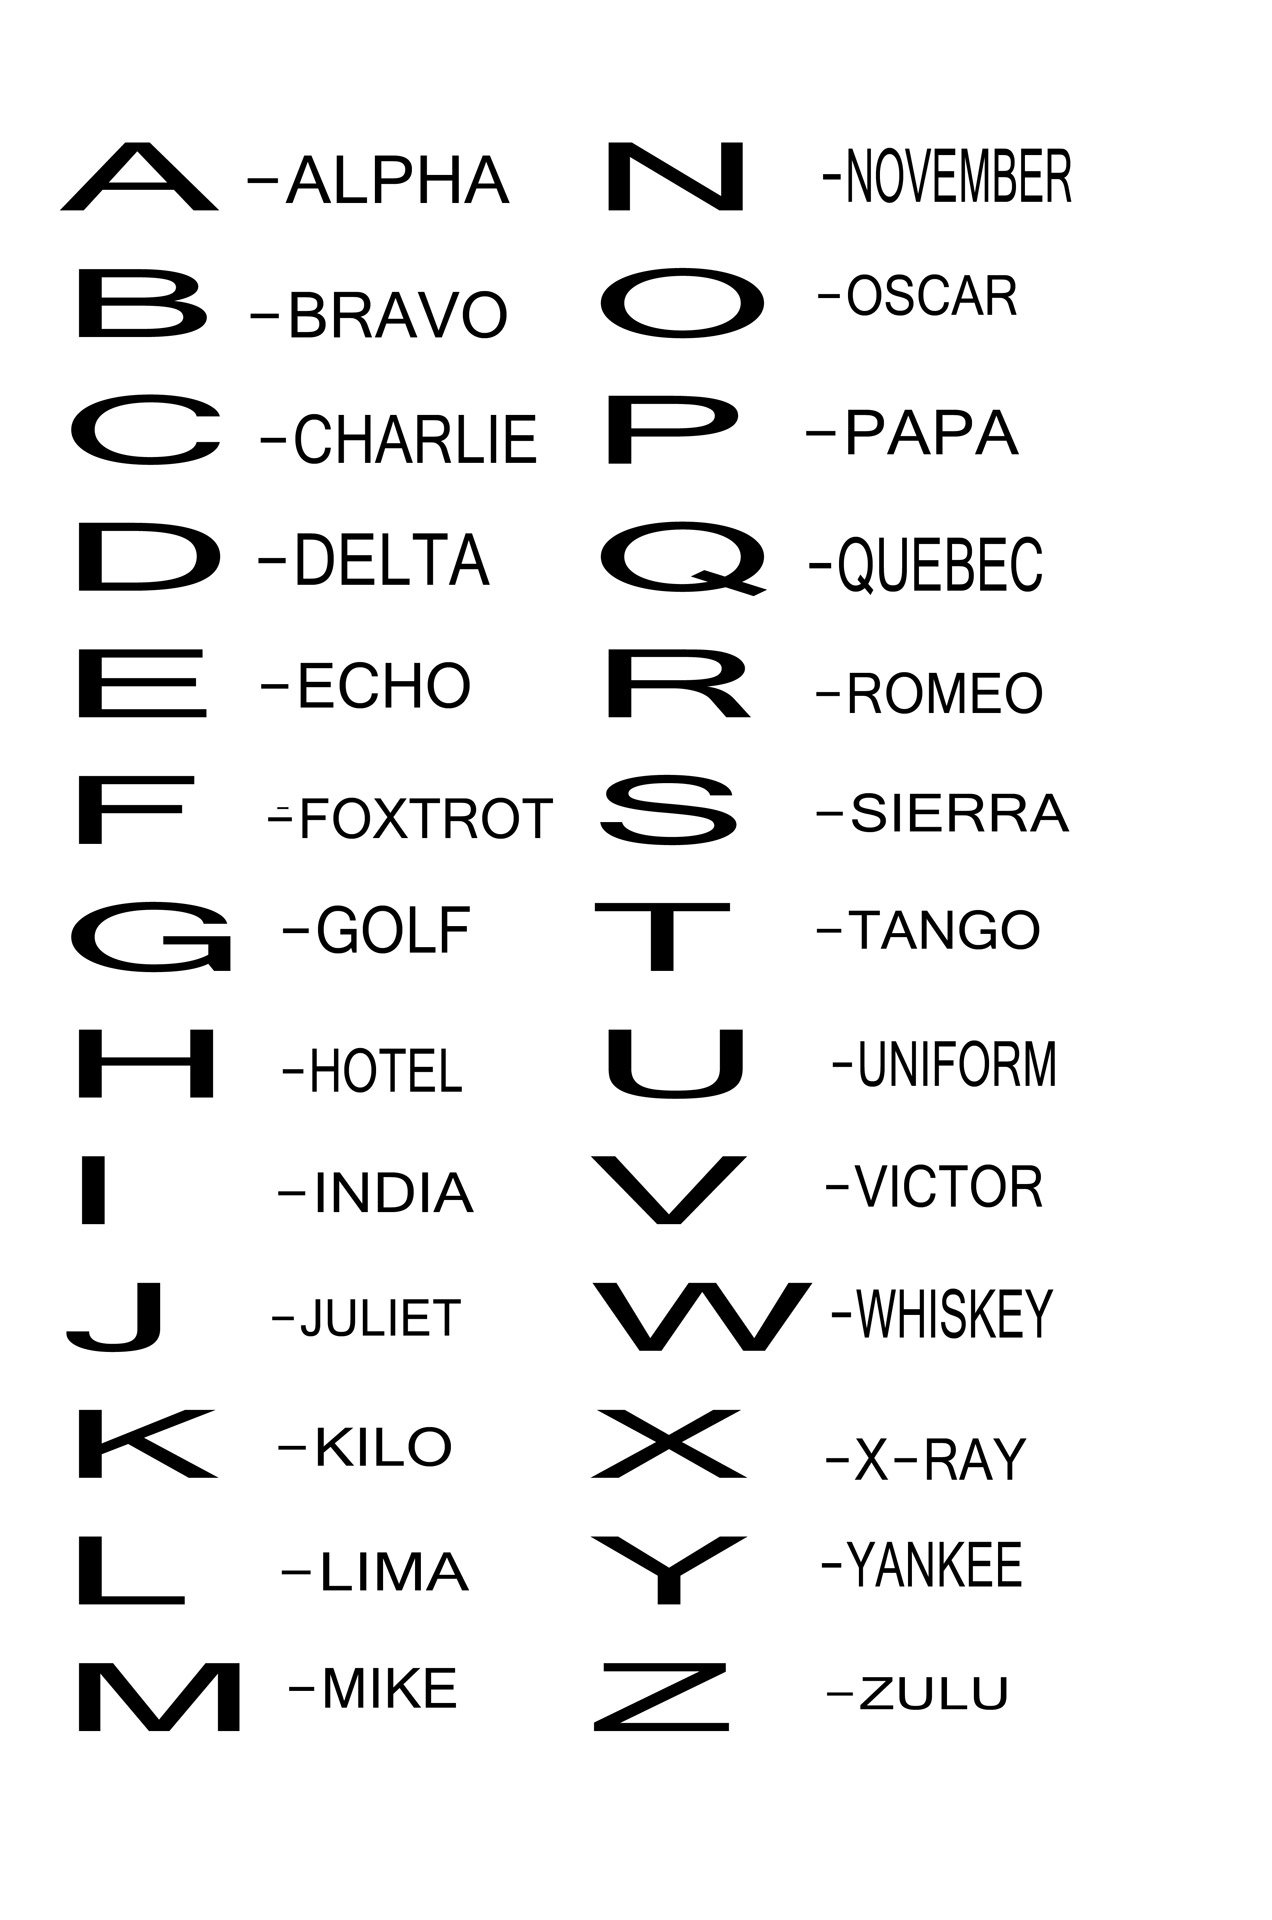 M In Phonetic Alphabet : Icao Phonetic Alphabet Used In Radiocommunications